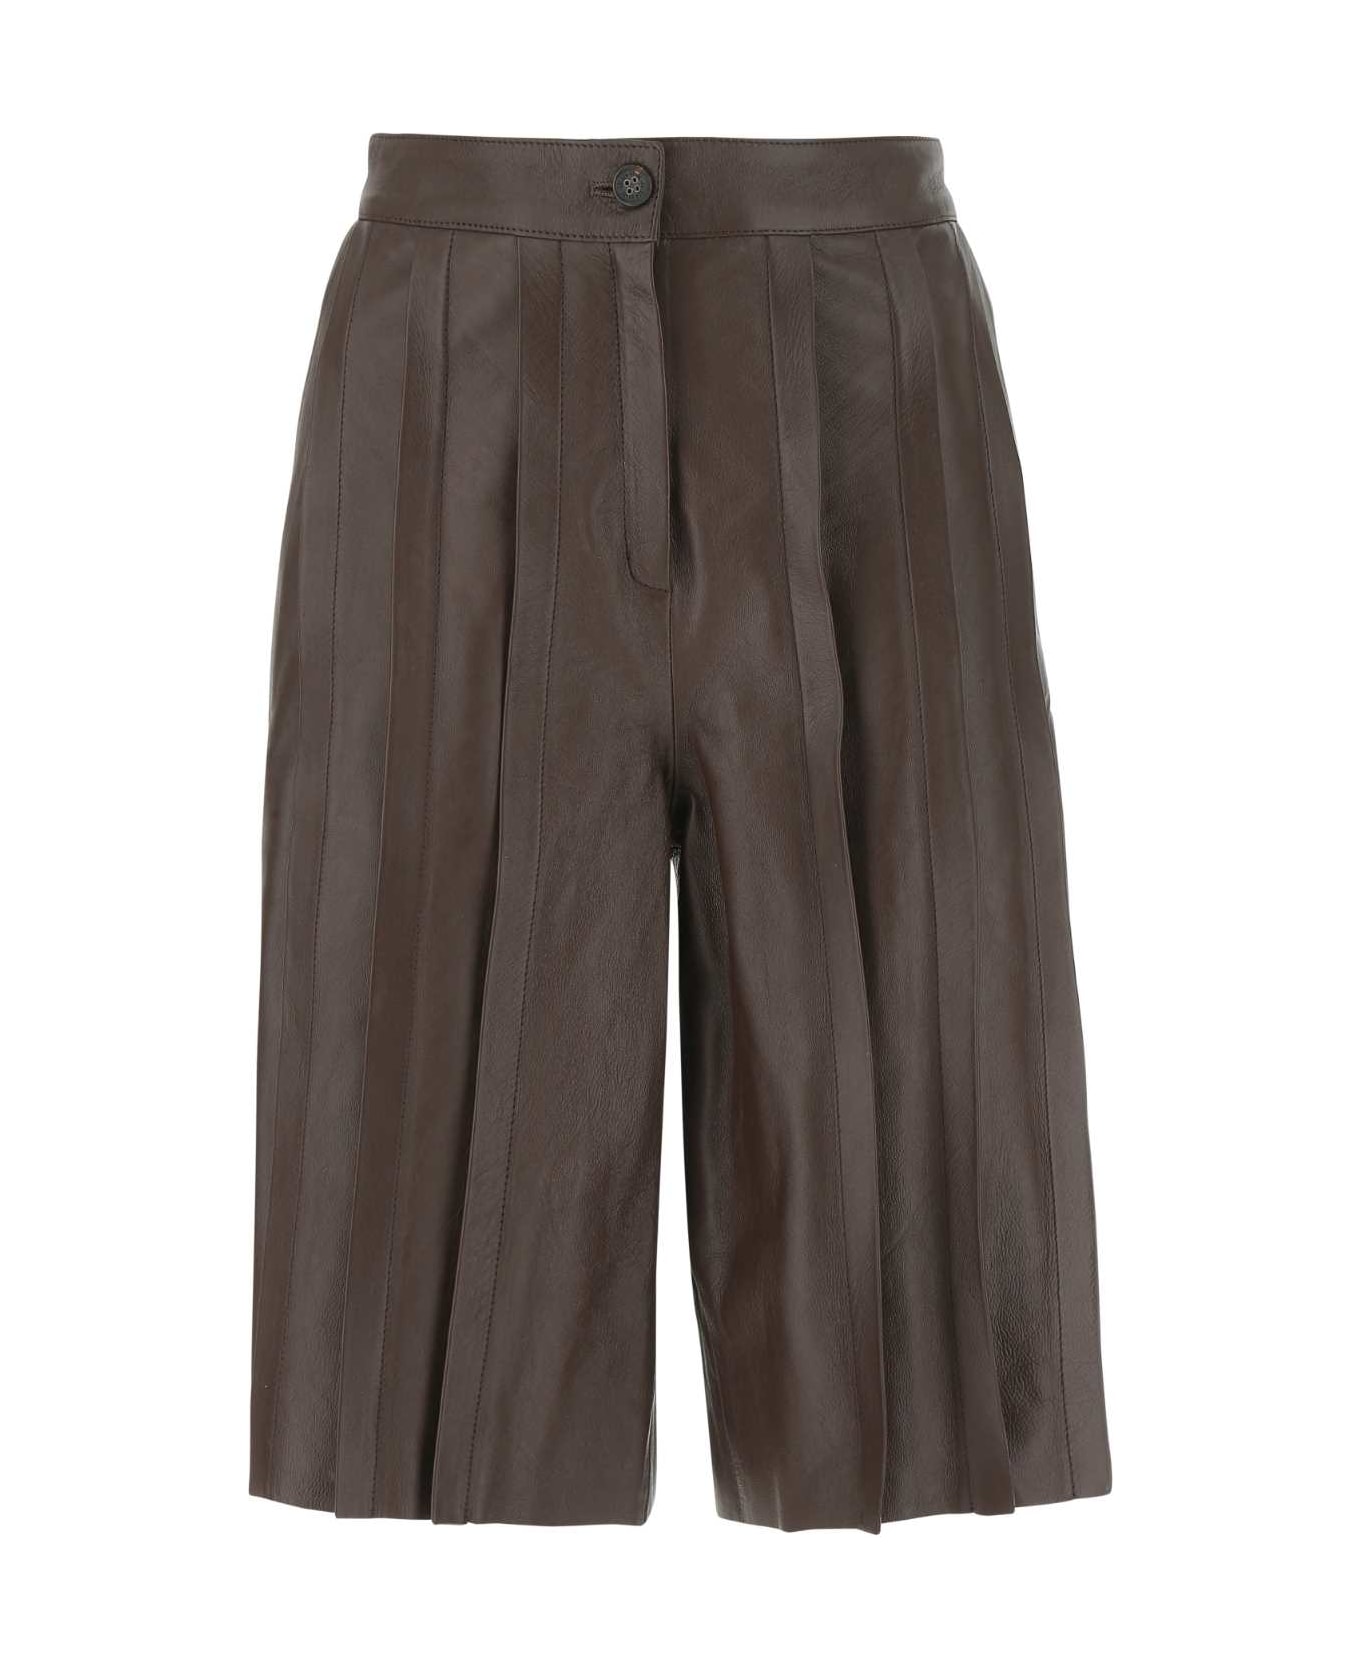 Golden Goose Brown Leather Bermuda Shorts - 55429